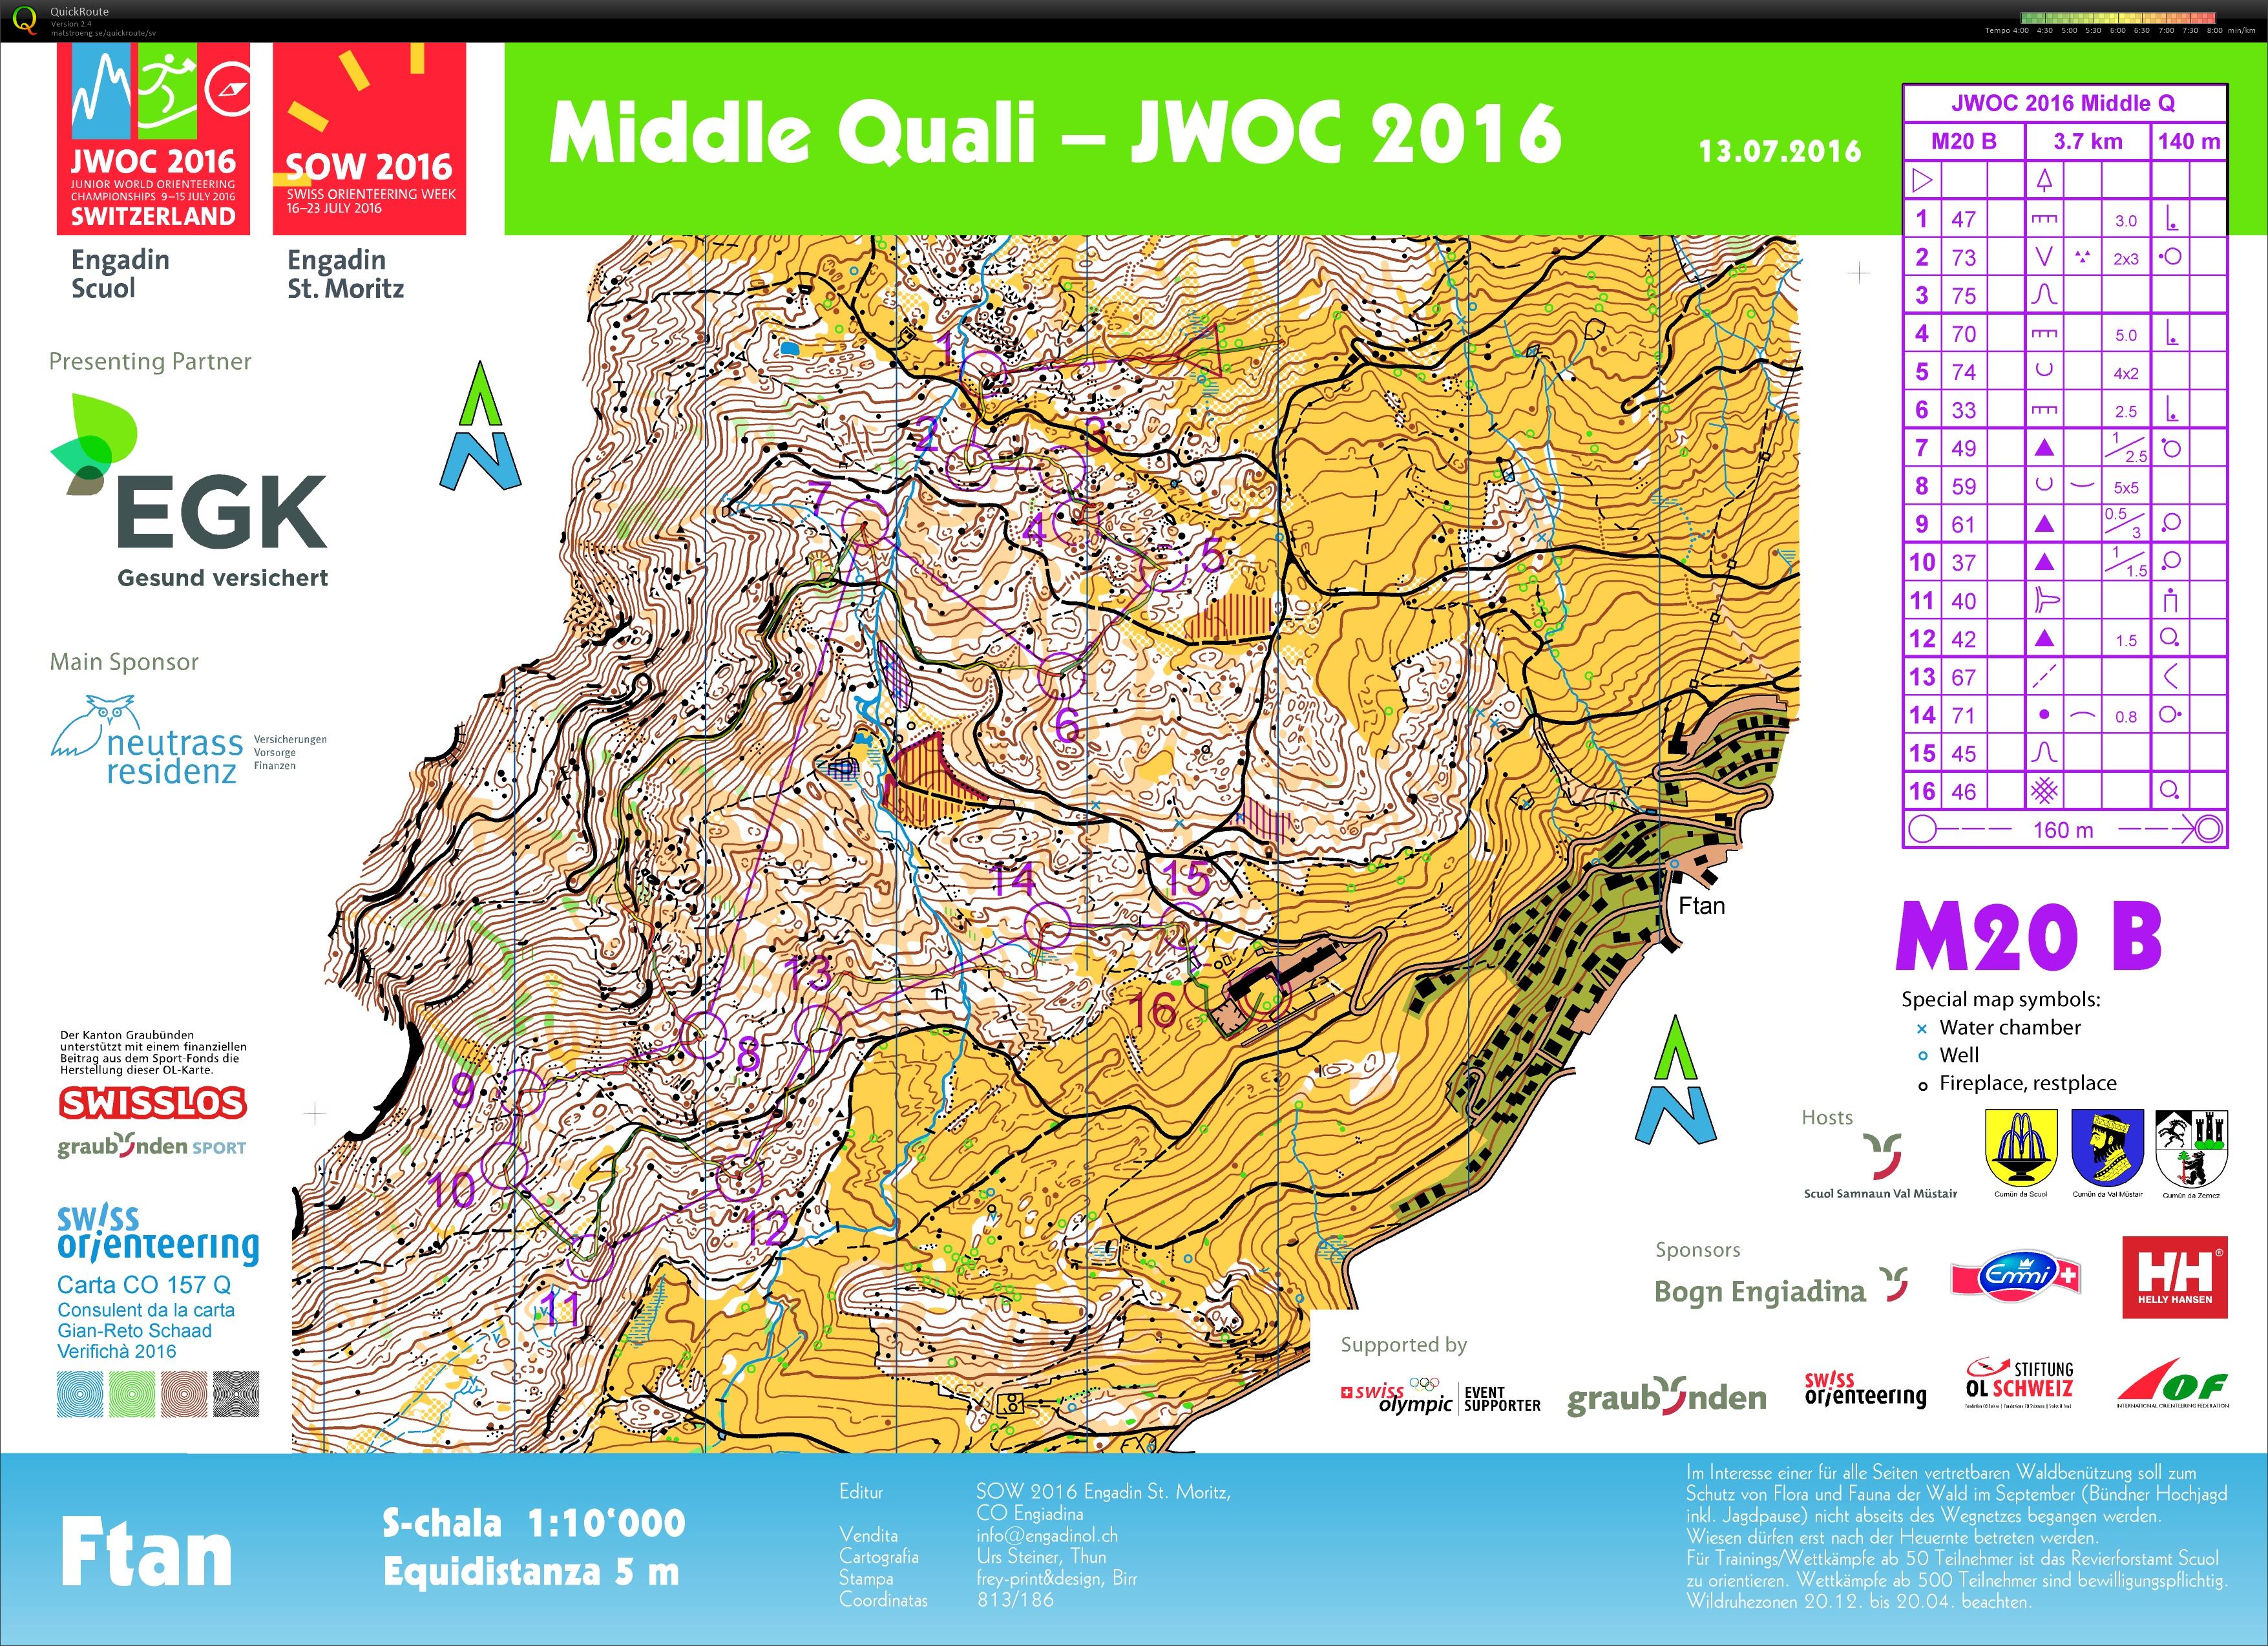 JWOC Middle Qualification heat B (13/07/2016)